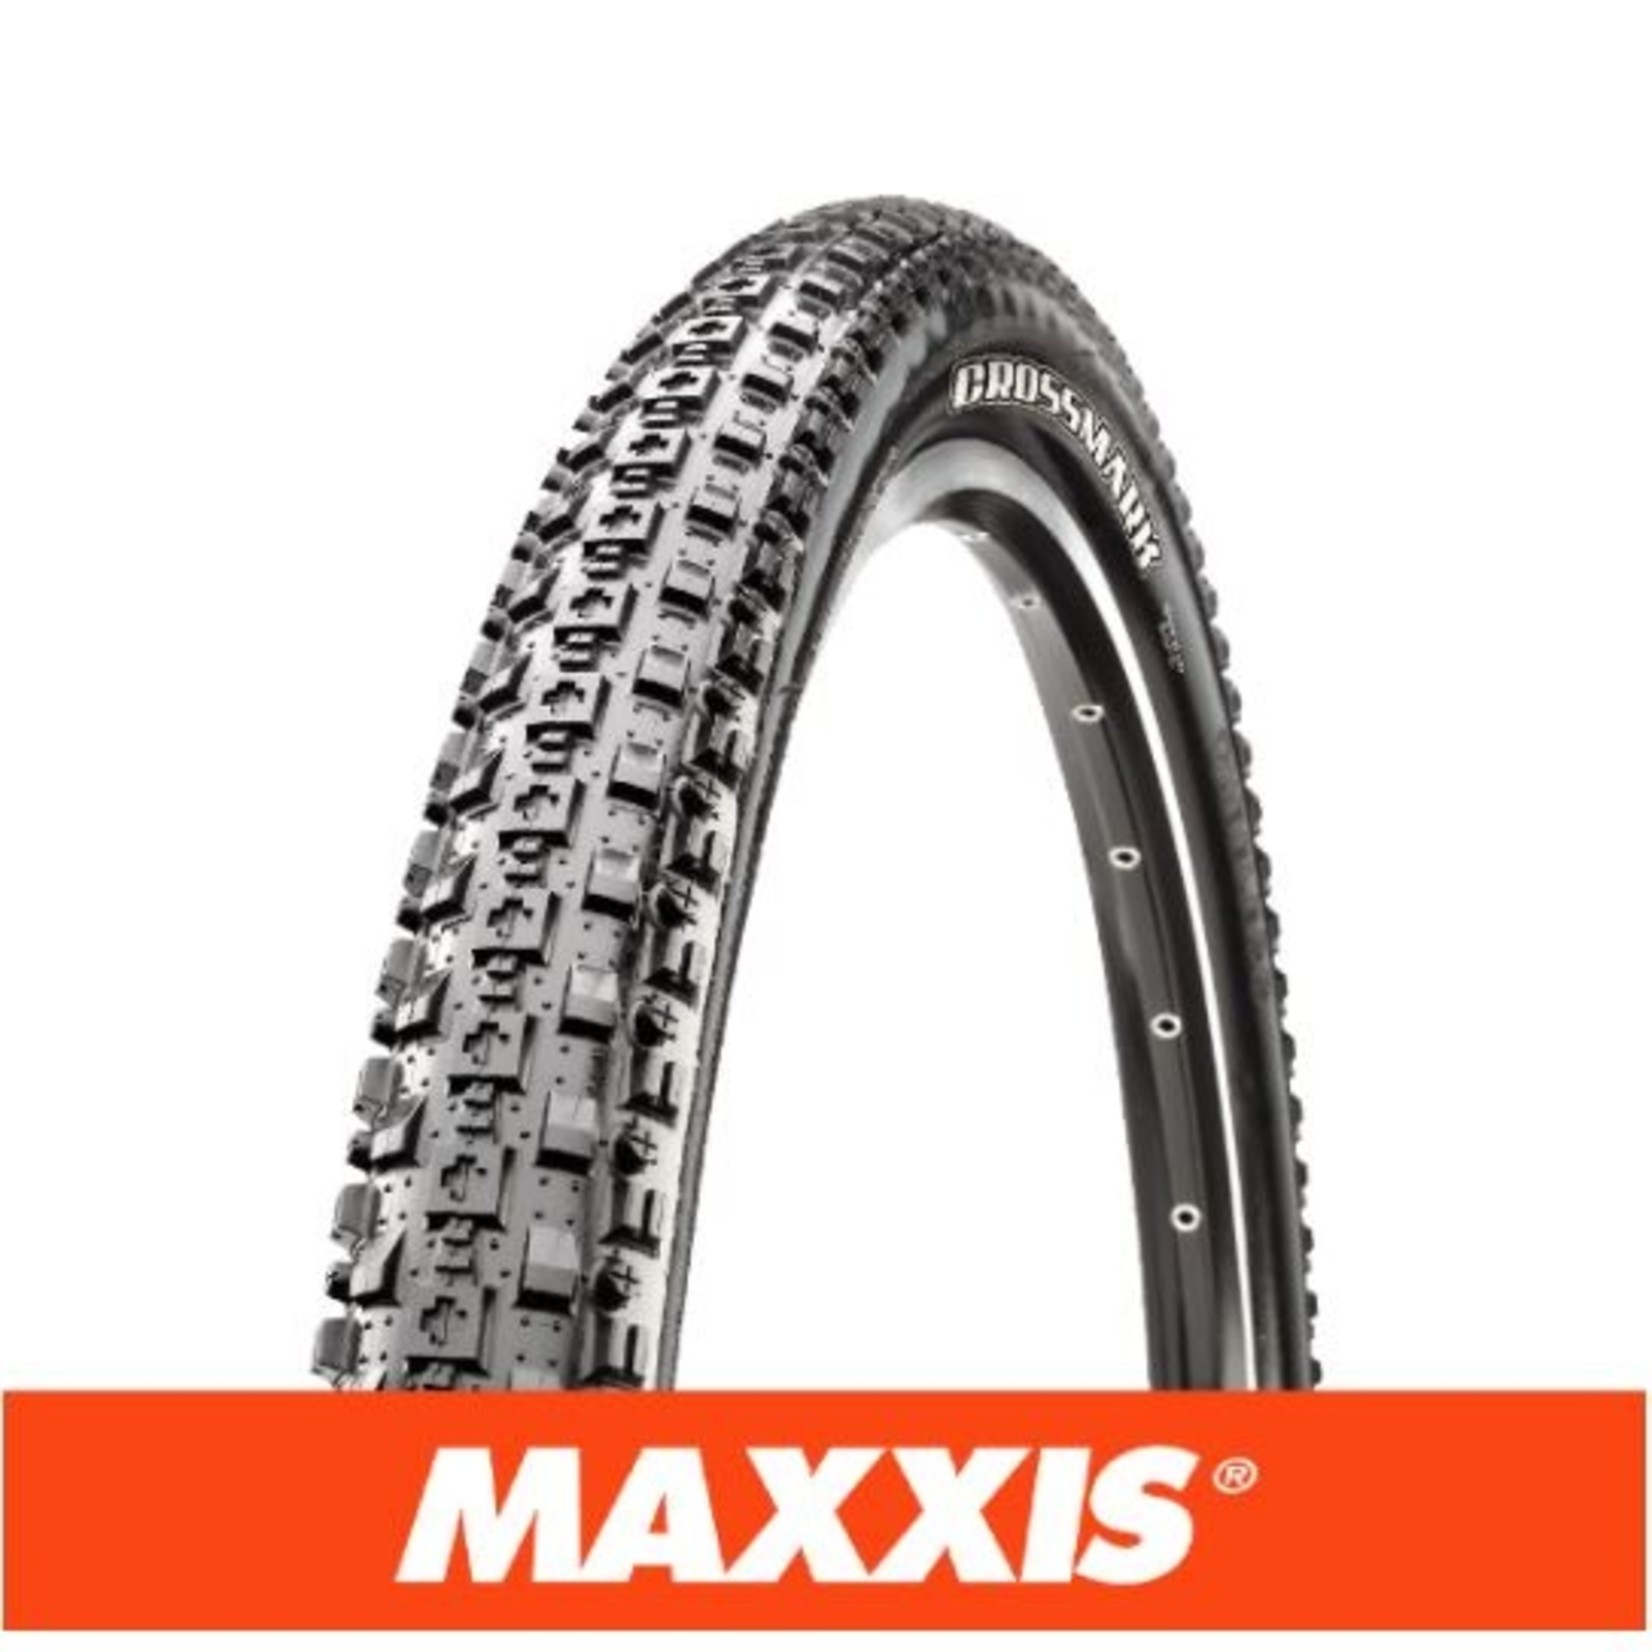 Maxxis Maxxis Crossmark Bike Tyre - 26 X 2.10 - Wire - 60 TPI - Single Compound - Black